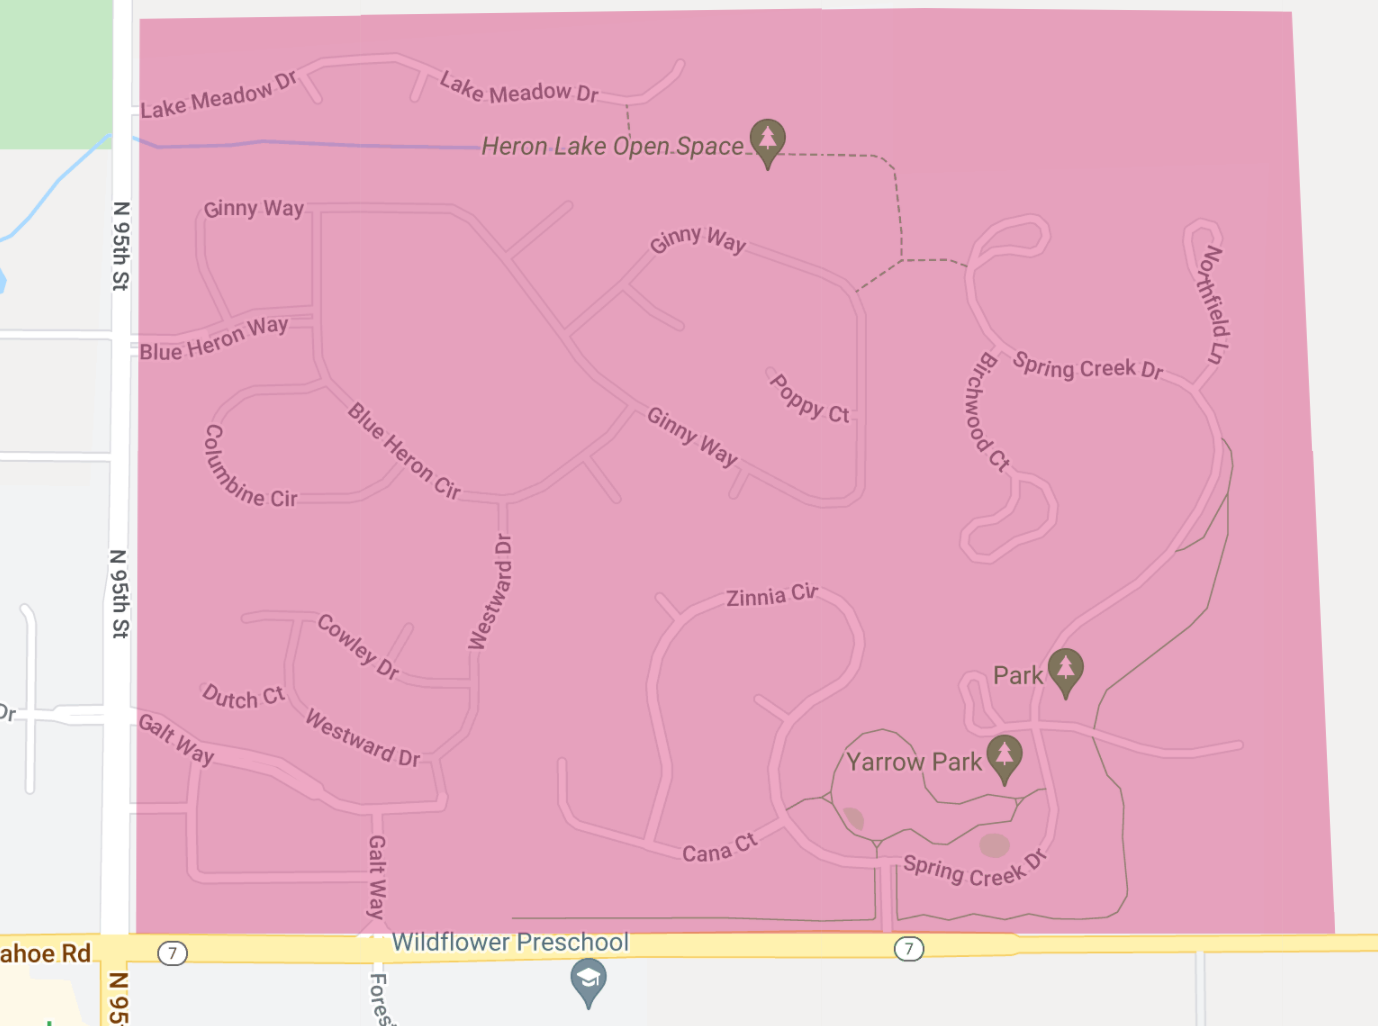 Map of Lafayette, Colorado Blue Heron neighborhood